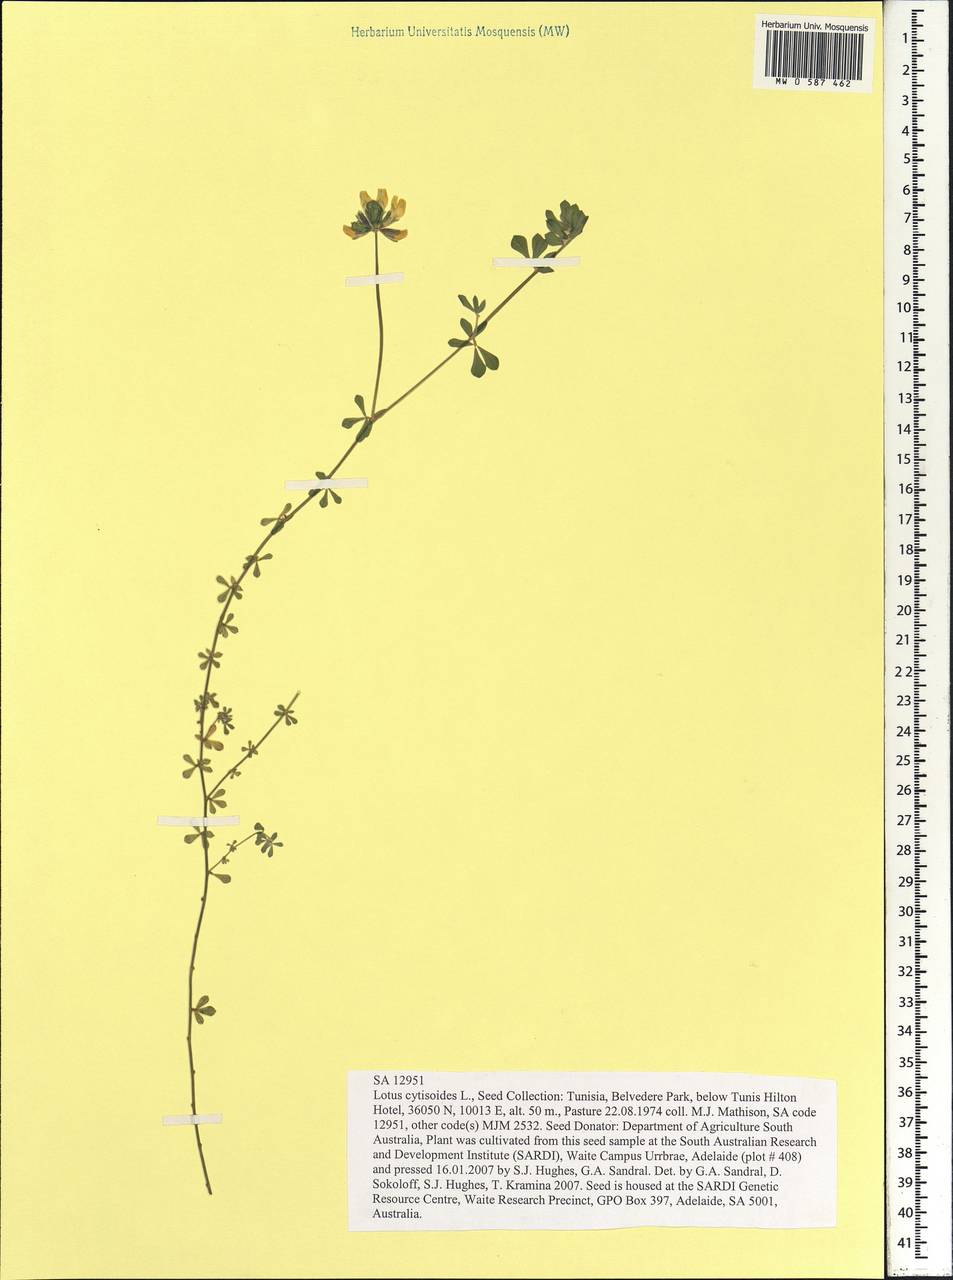 Lotus cytisoides L., Africa (AFR) (Tunisia)